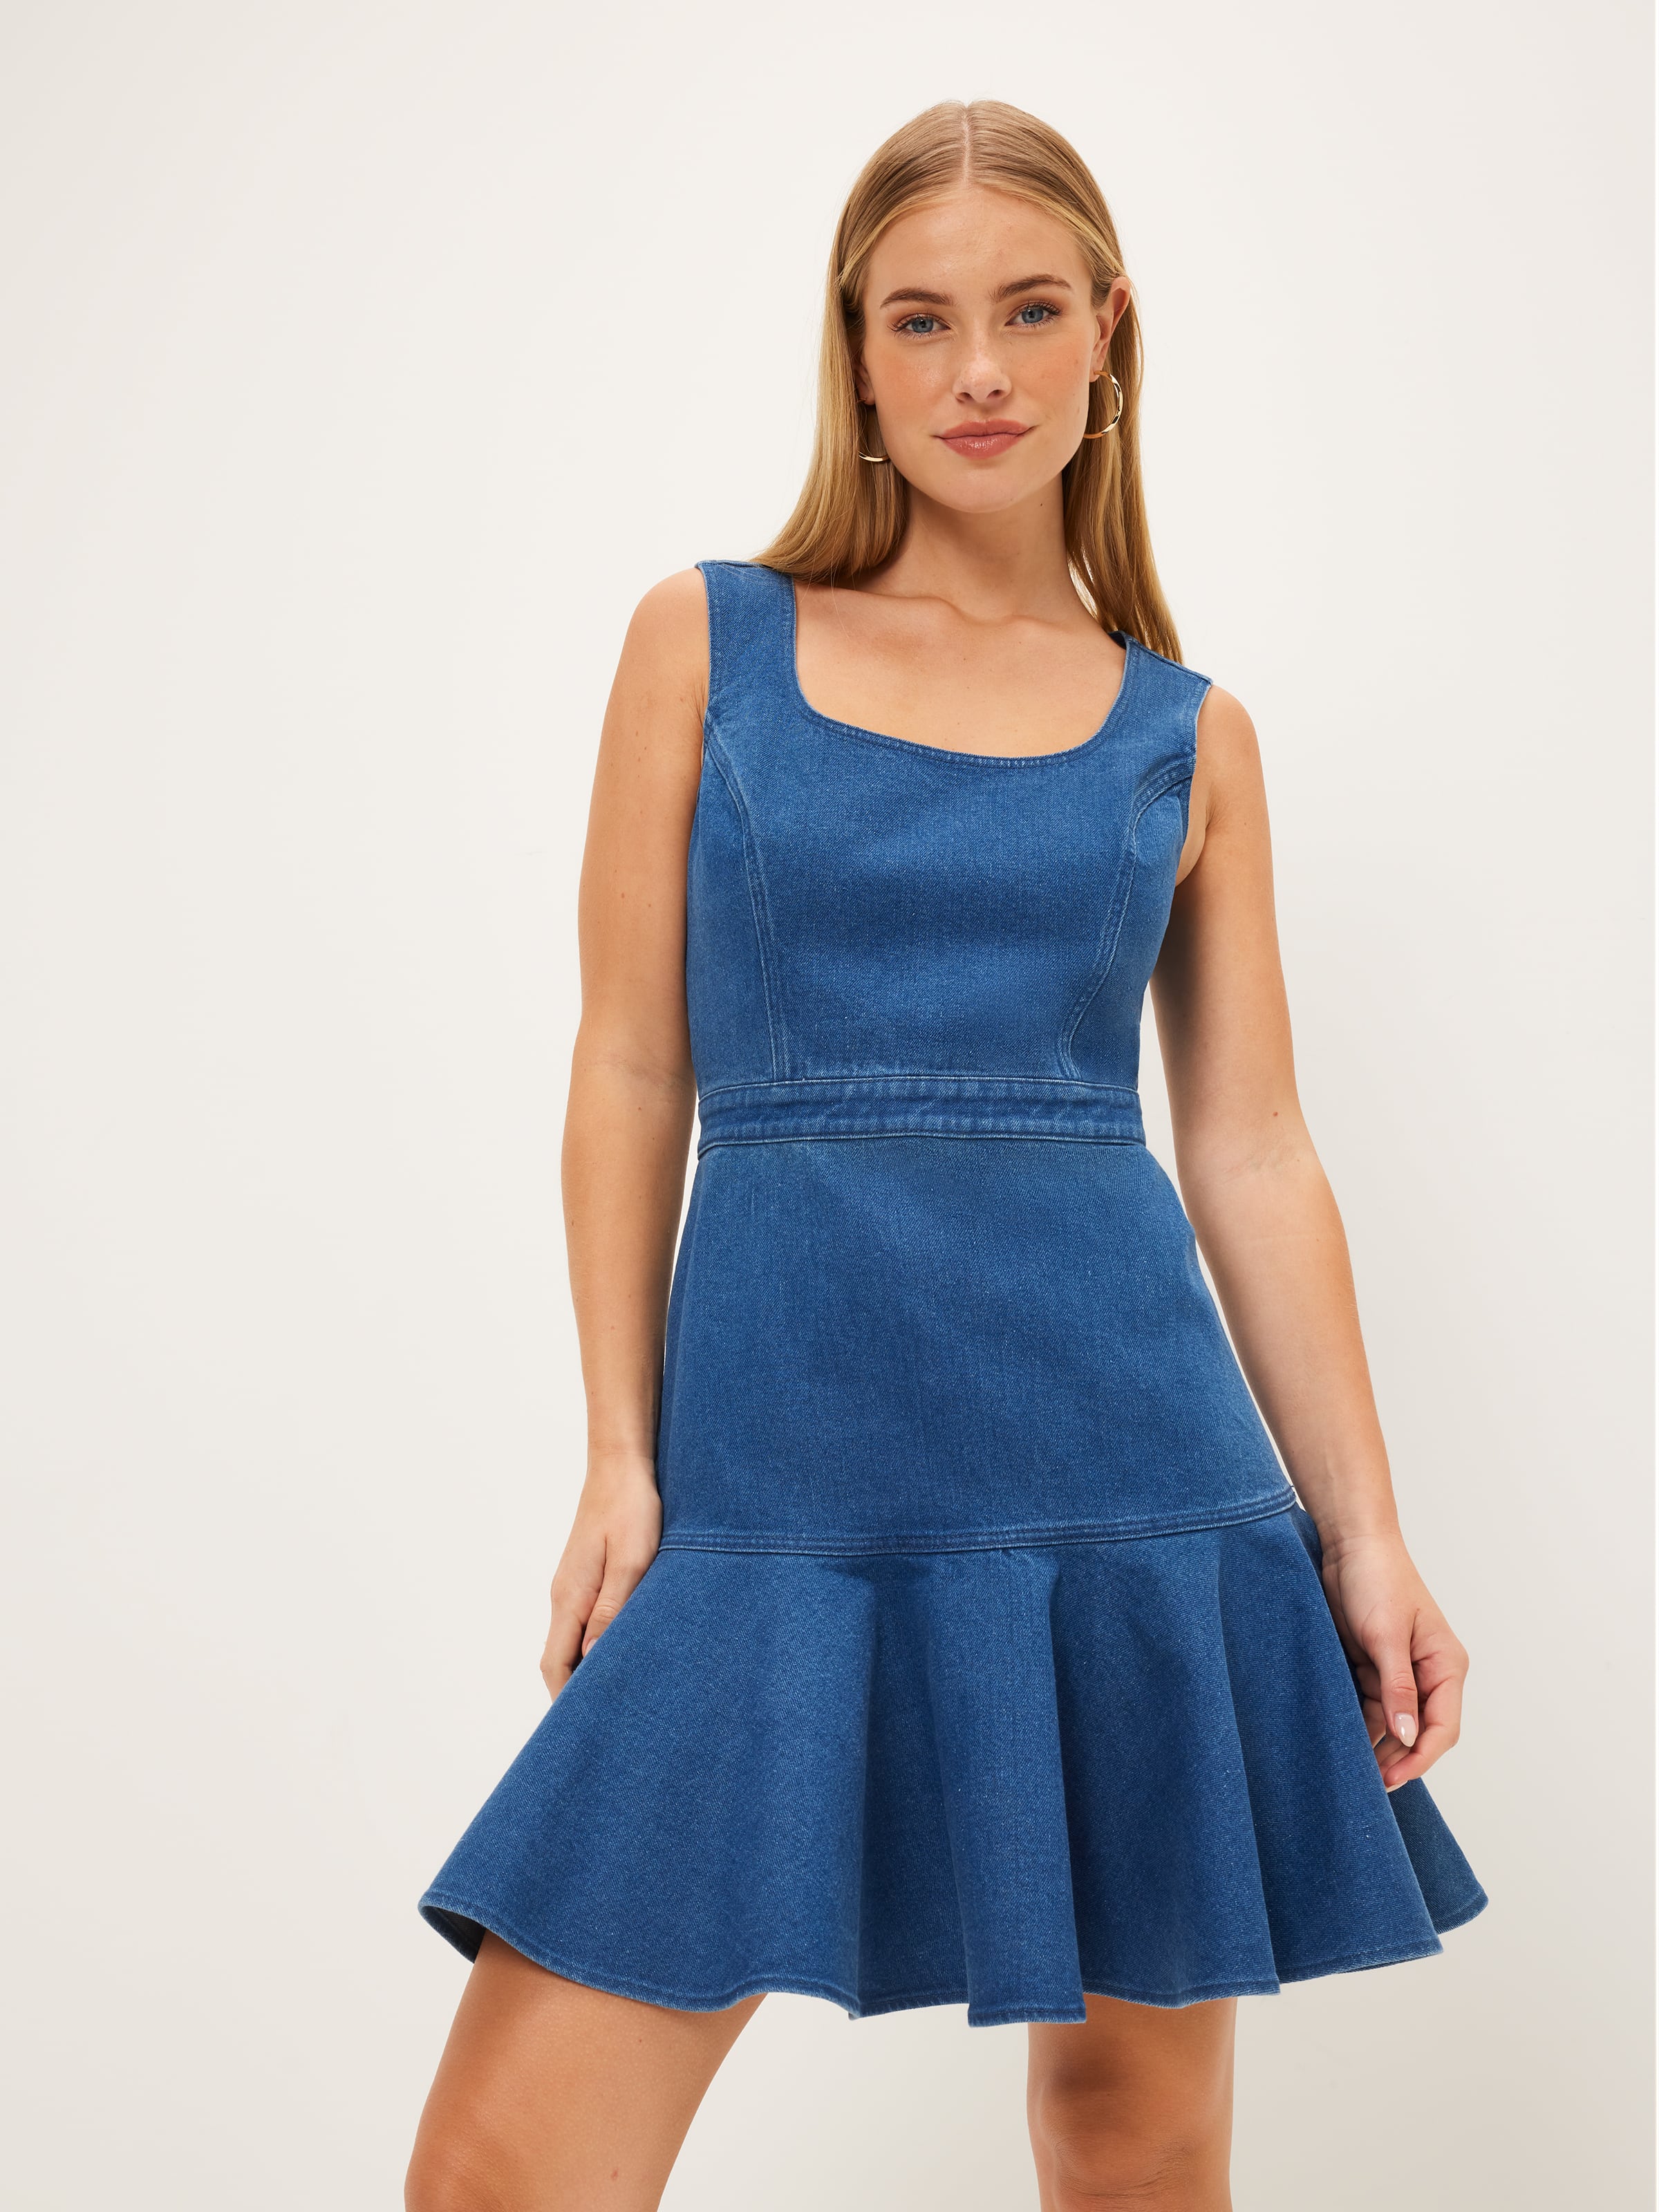 Shop for Cotton Mix | Dresses | Fashion | Kaleidoscope